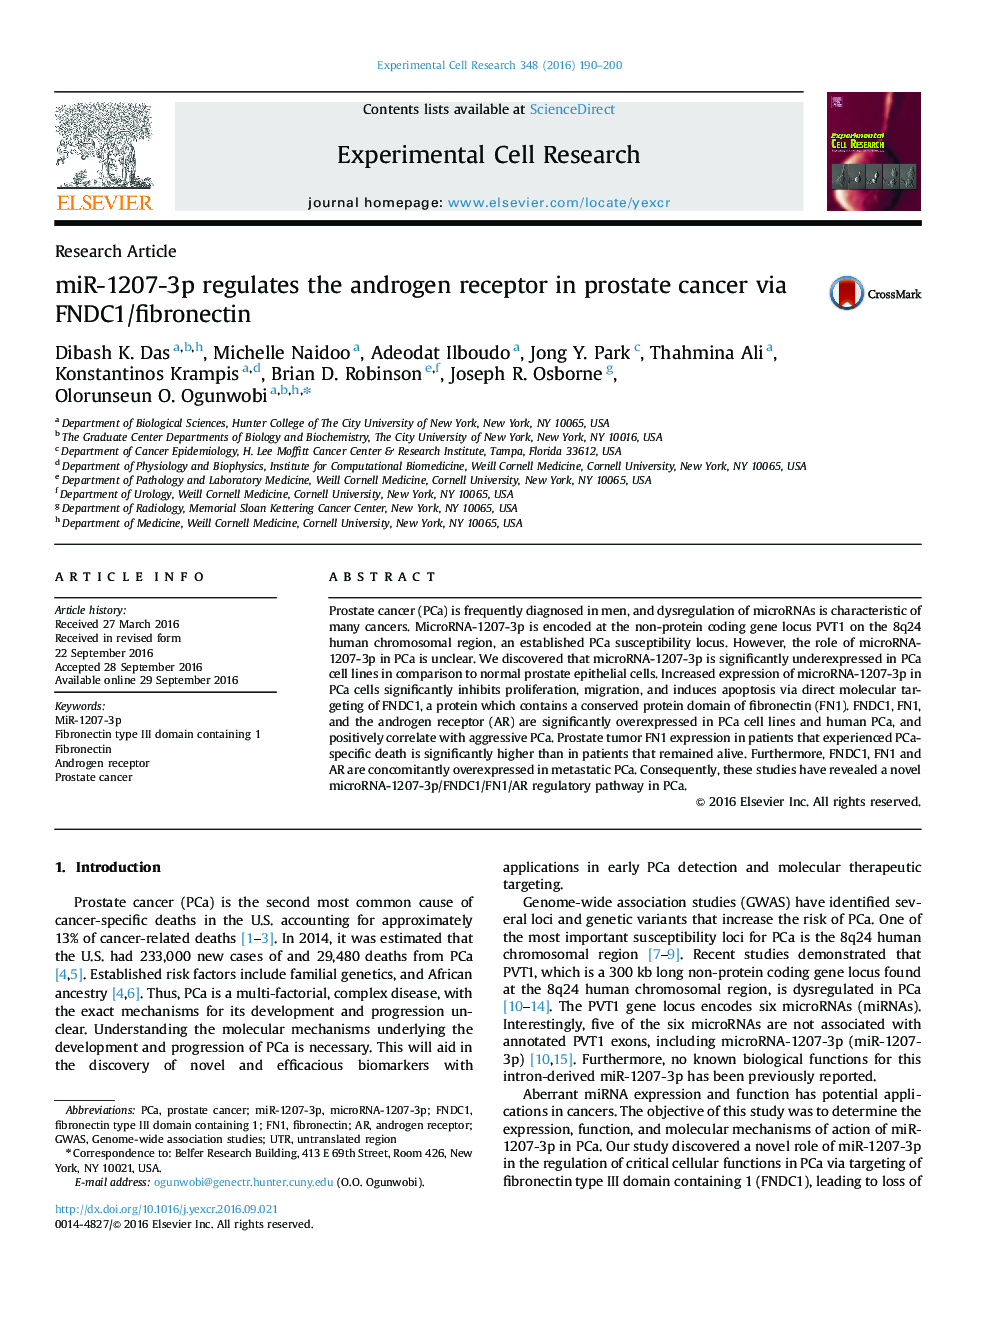 miR-1207-3p regulates the androgen receptor in prostate cancer via FNDC1/fibronectin